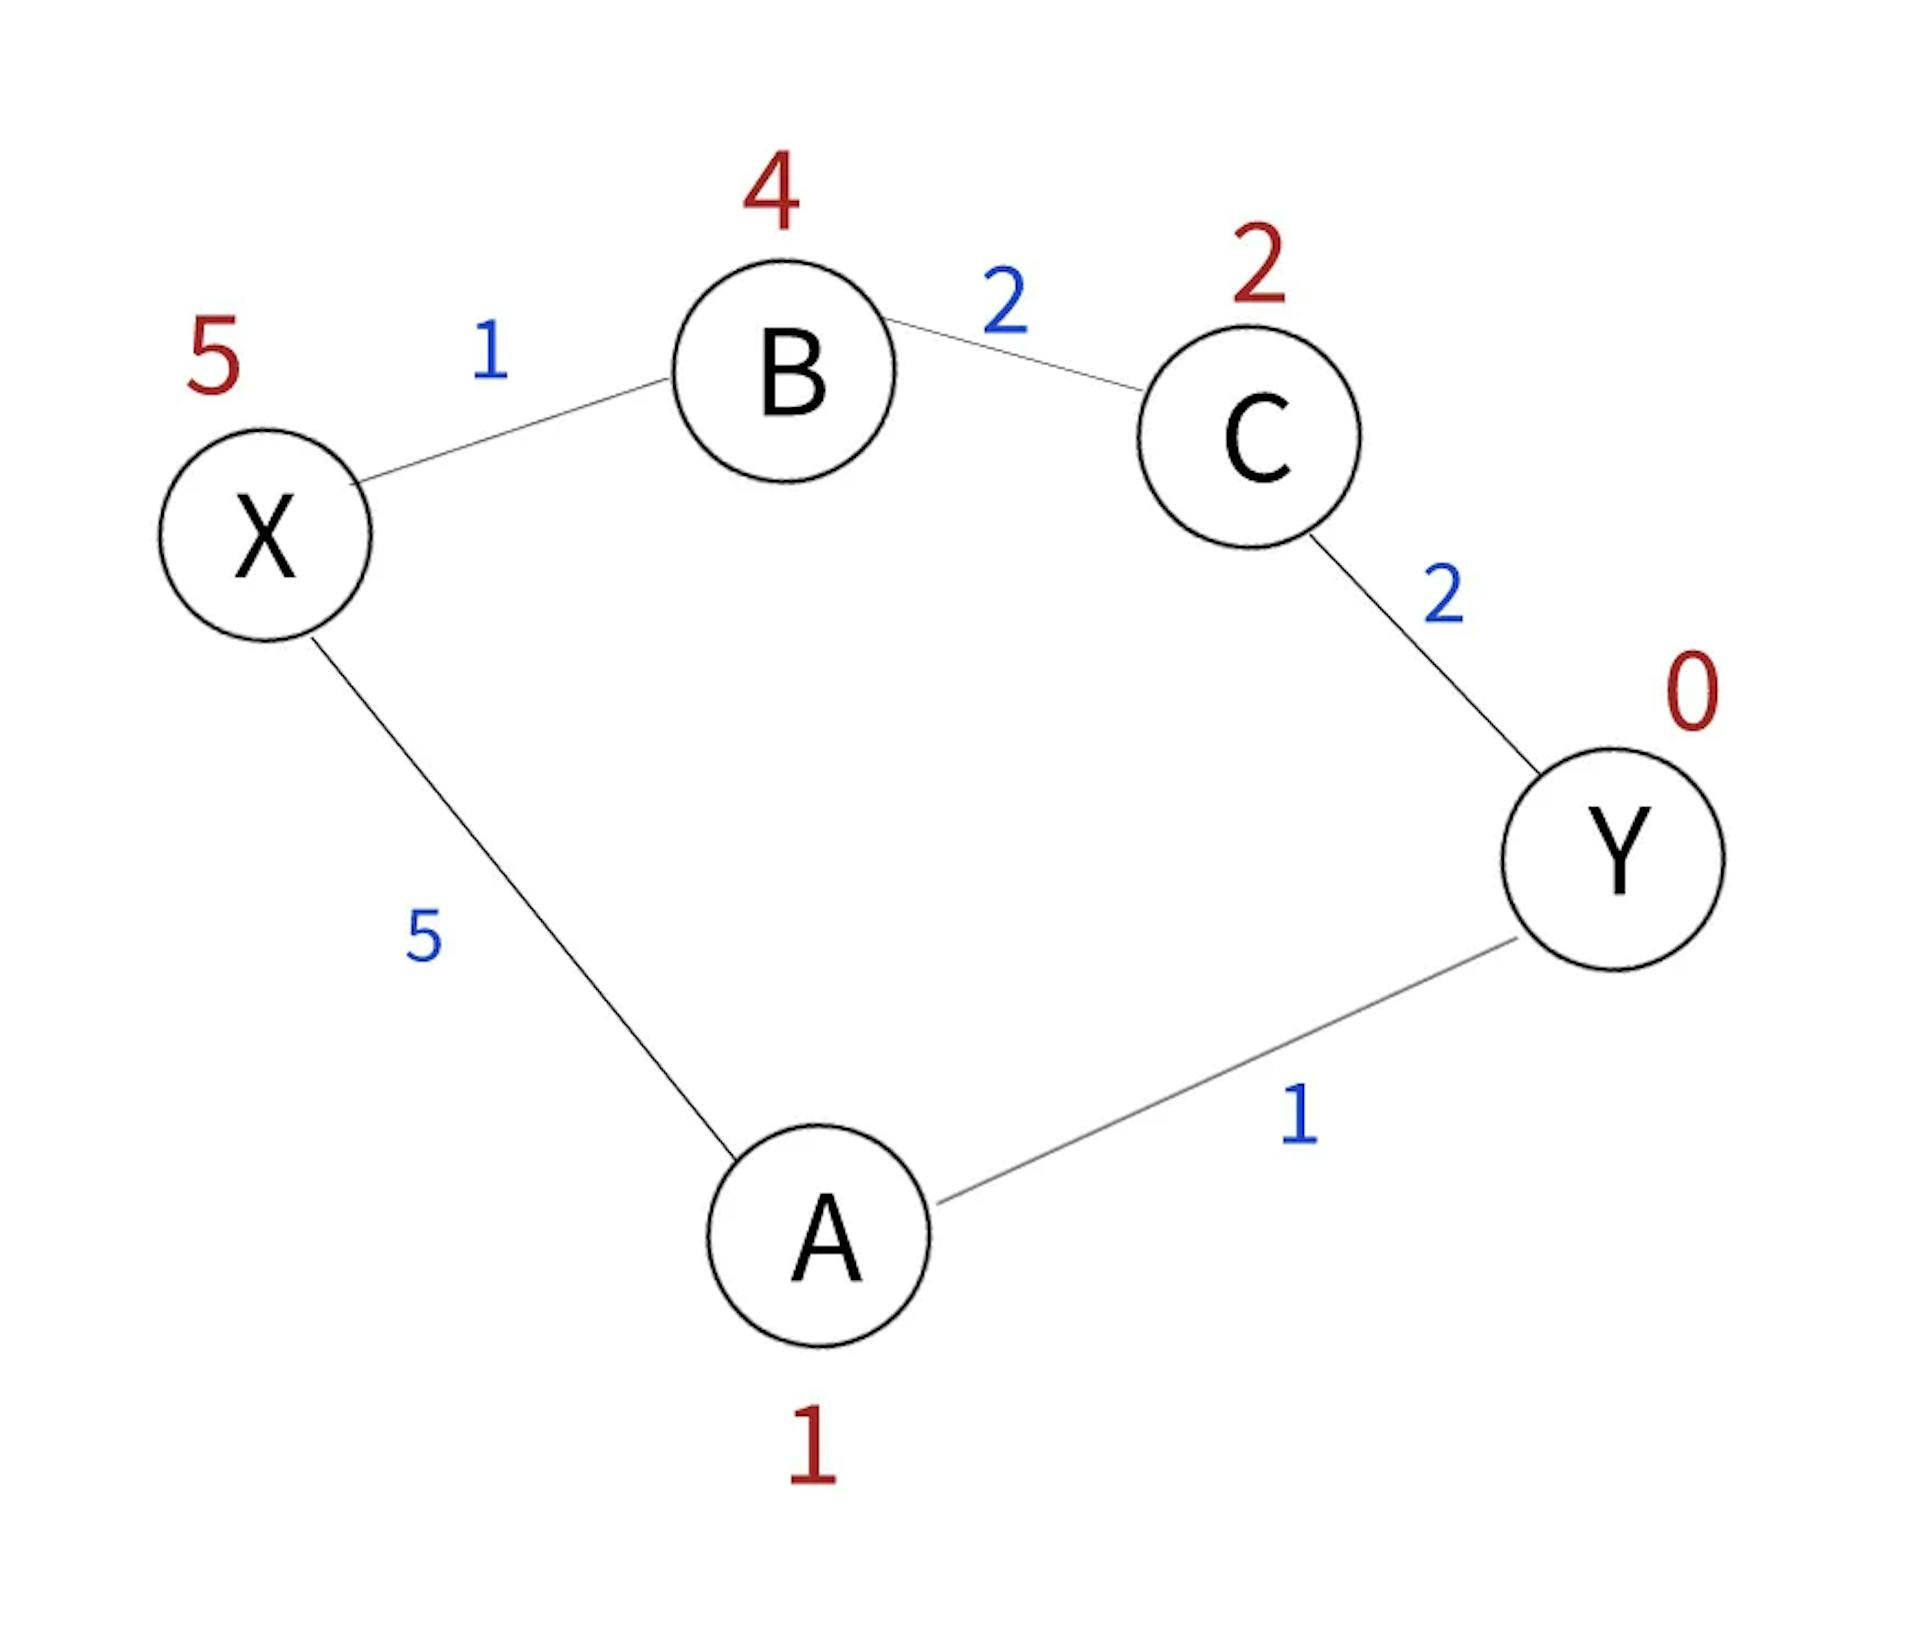 Figure 2. Sample route